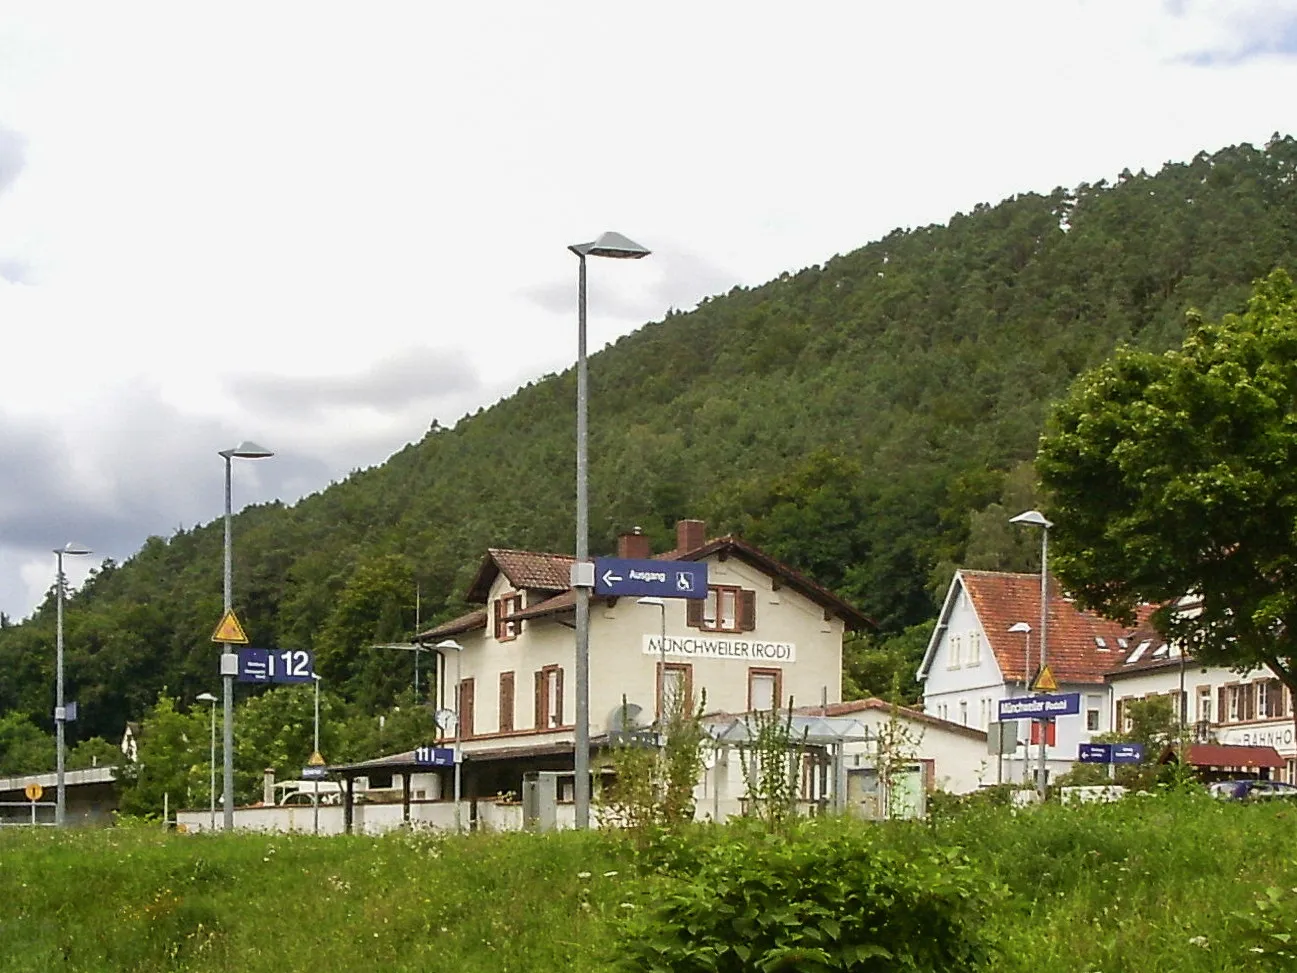 Image of Münchweiler an der Rodalb